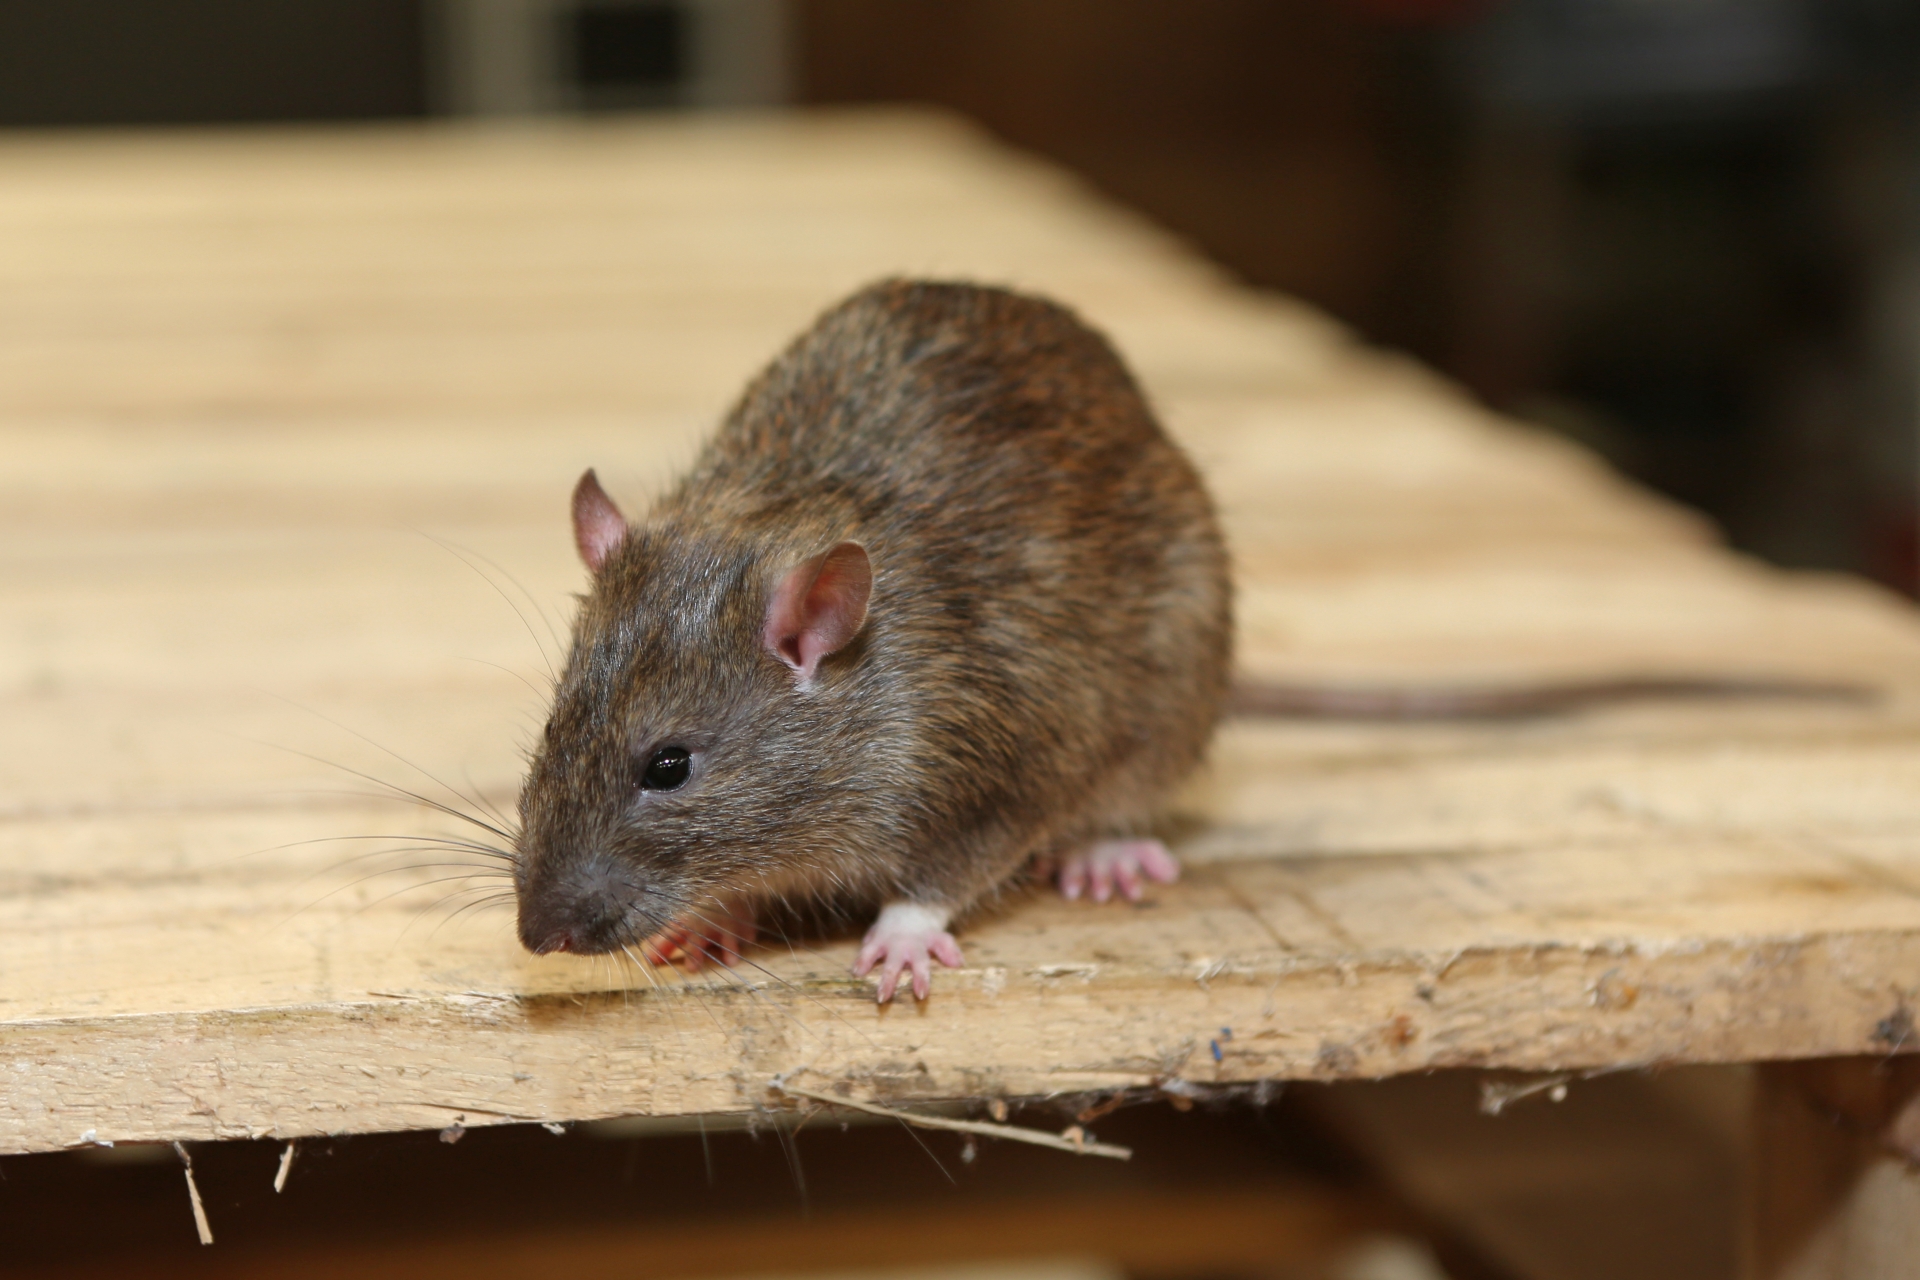 Rat extermination, Pest Control in Eltham, Mottingham, SE9. Call Now 020 8166 9746